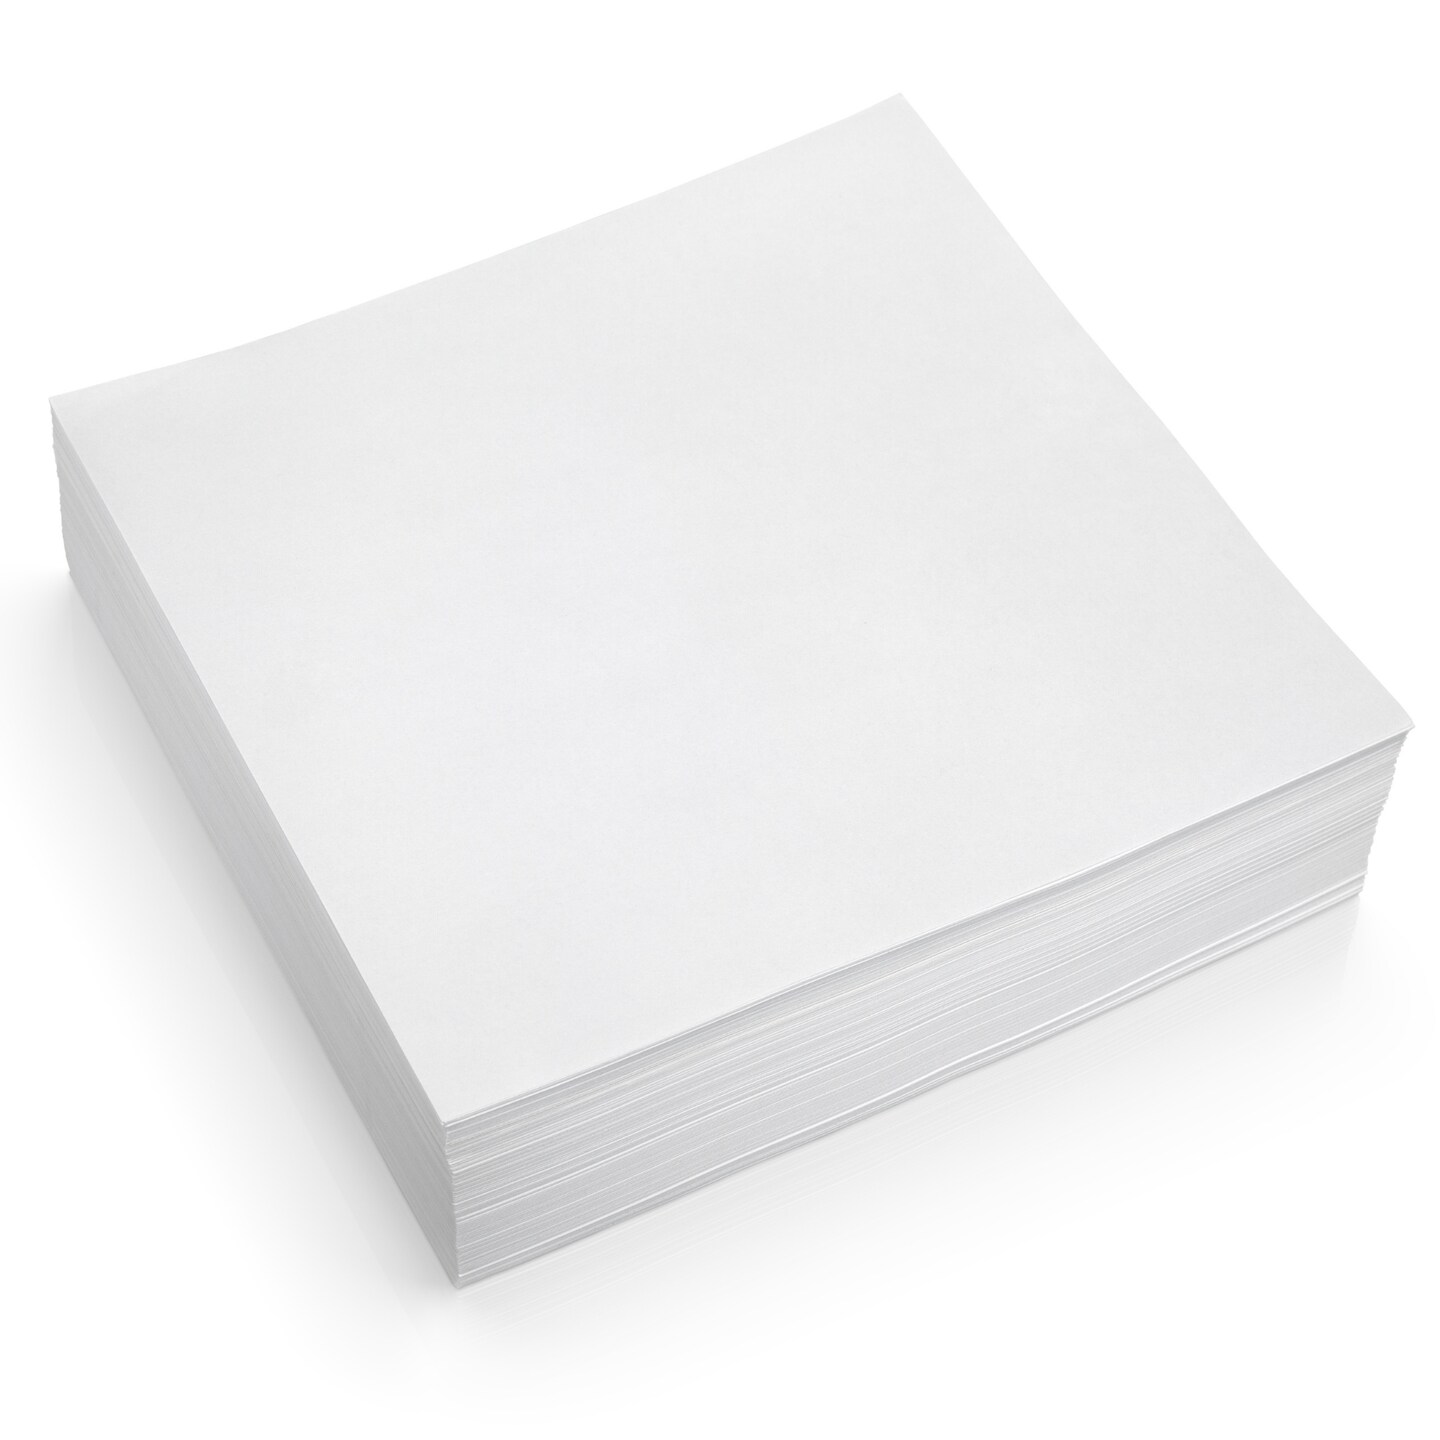 Butcher Paper Sheets - White, 18 x 24 - ULINE - Bundle of 1,250 - S-15675